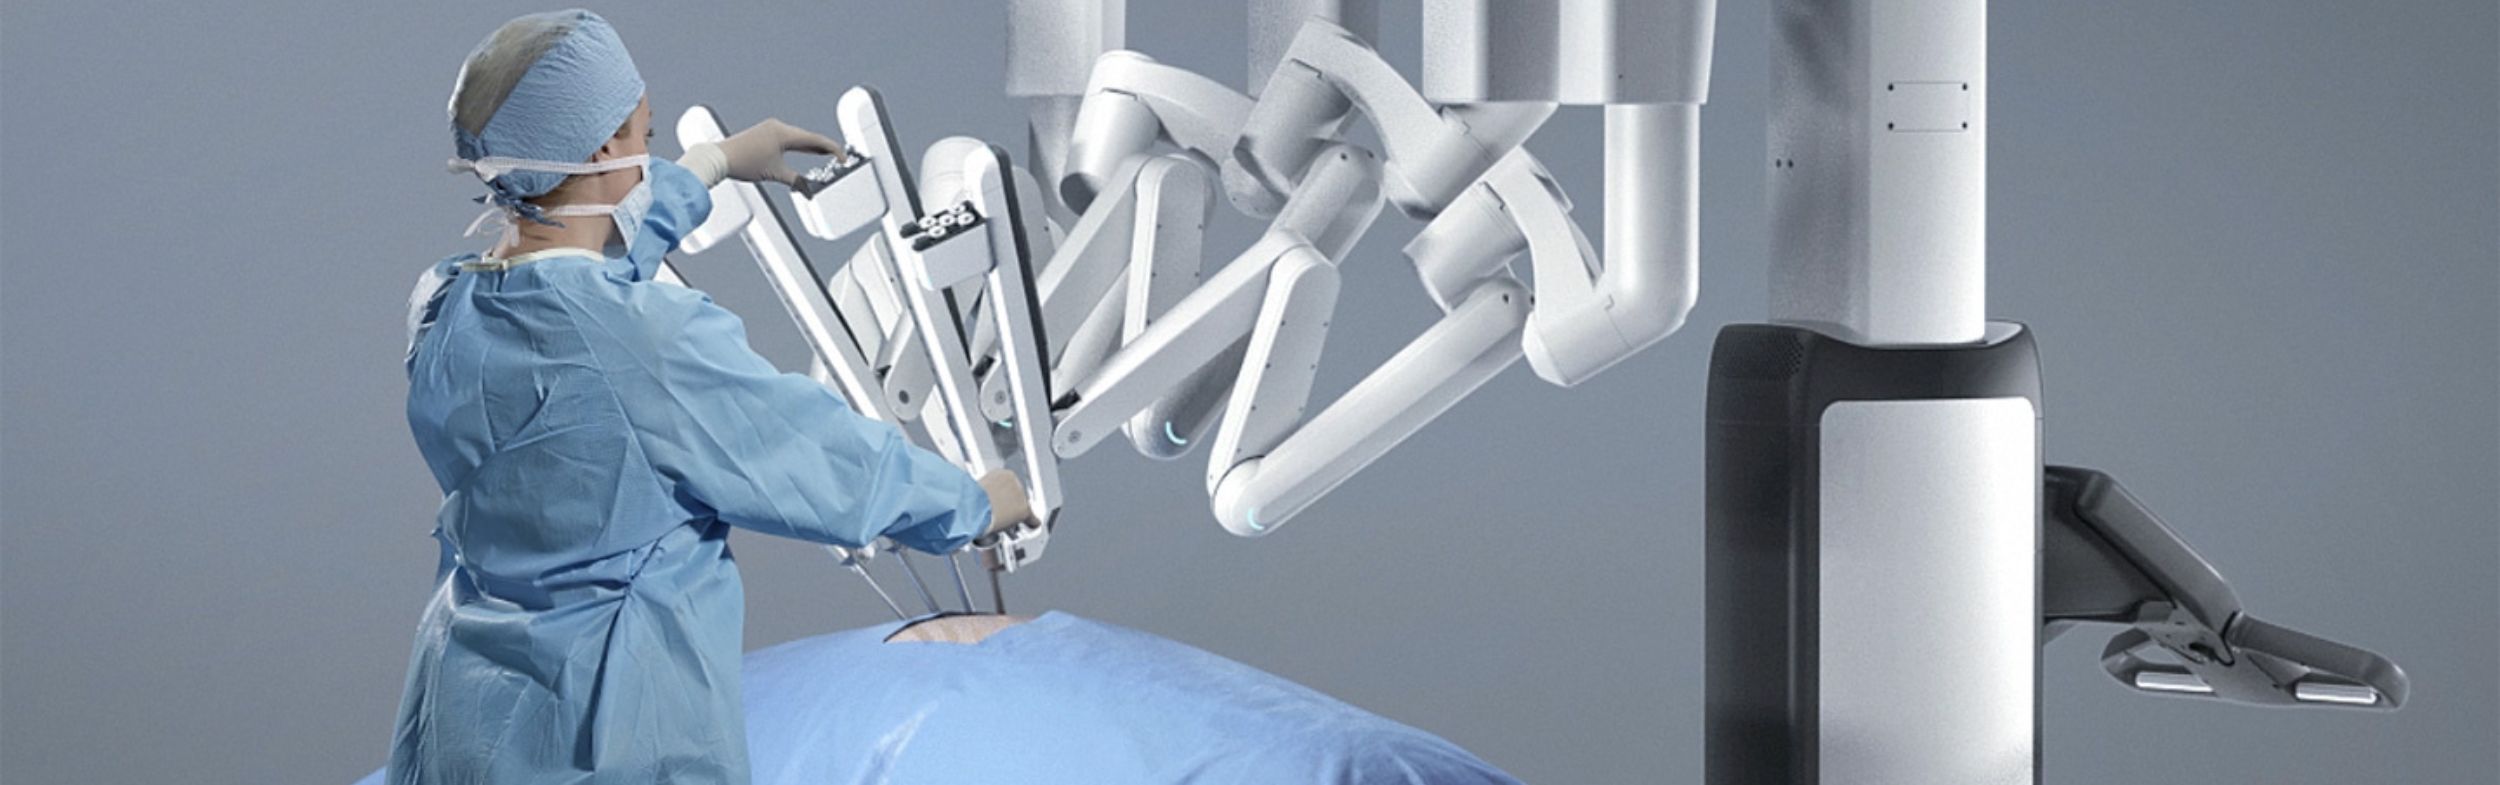 SJF Website_Cancer Care_da Vinci Surgical System console  (1)